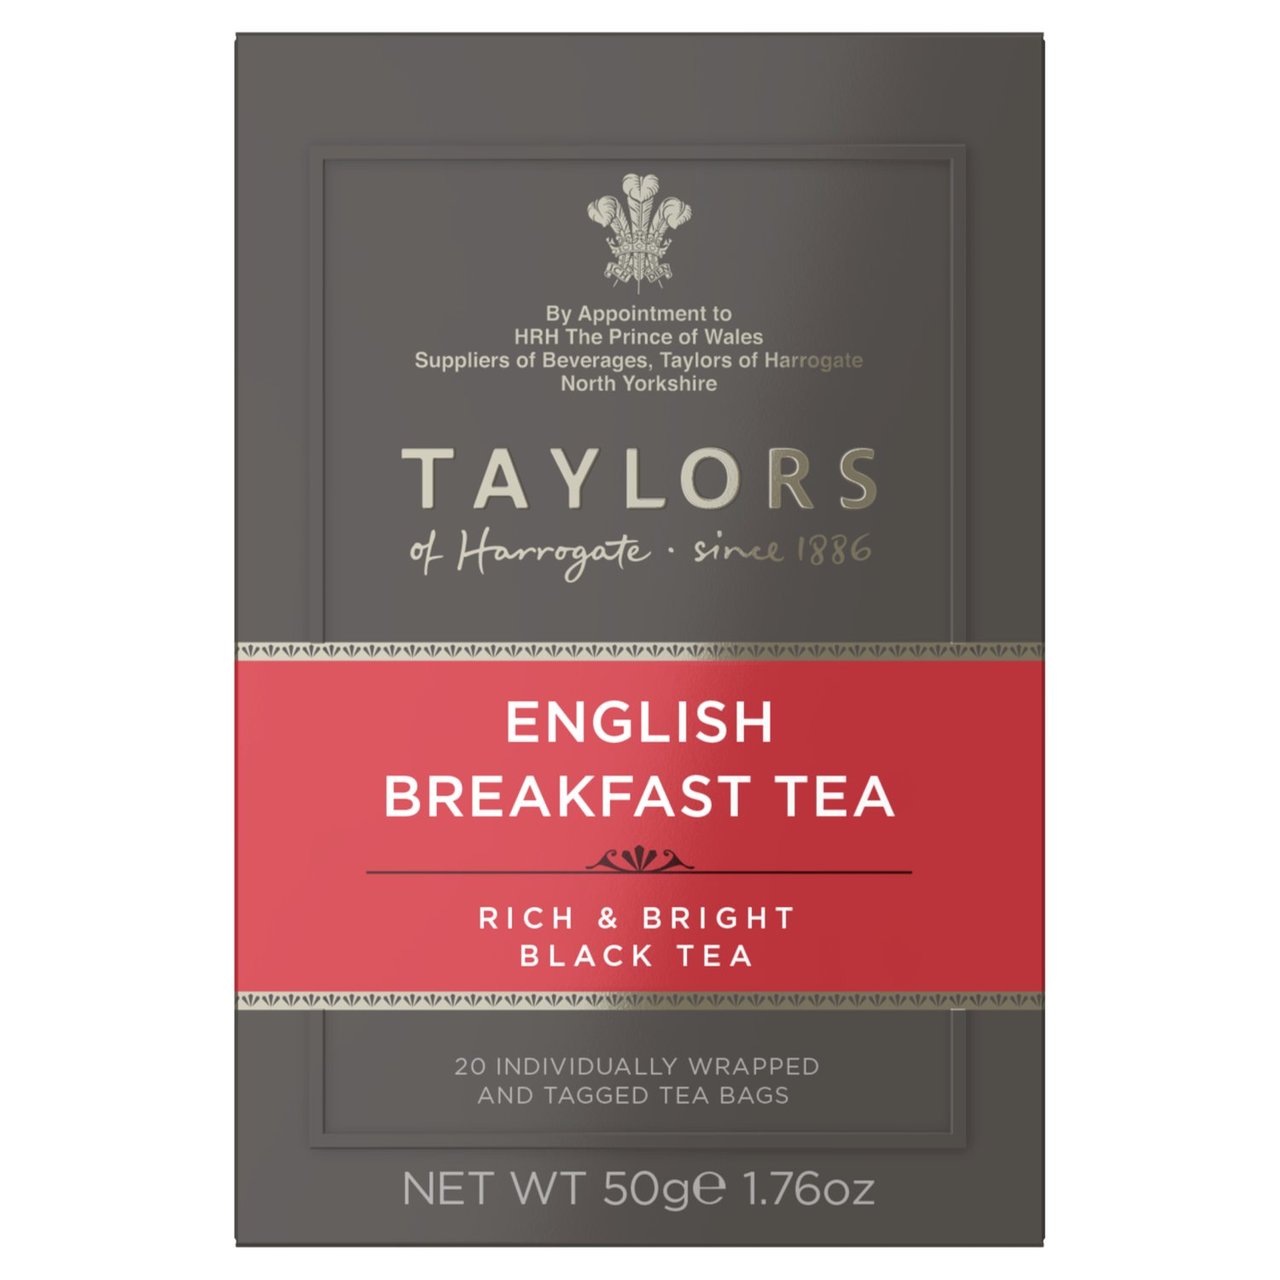 English Breakfast Tea - The Great Yorkshire Shop